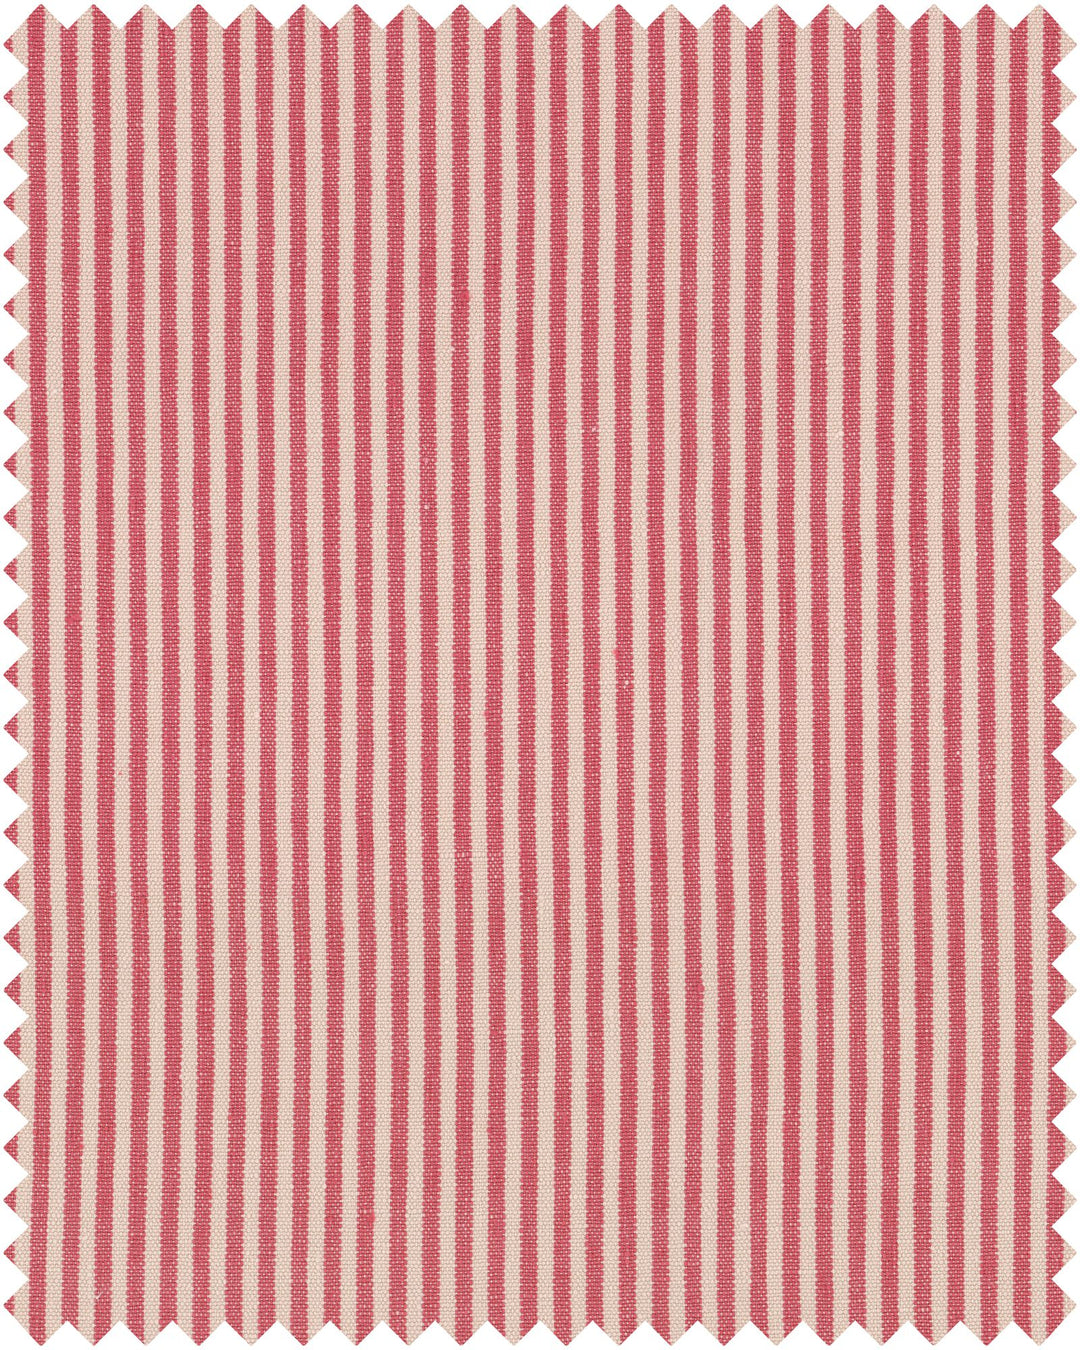 mind-the-gap-rhubarb-stripe-linen-weave-fabric-red-cream-small-stripe